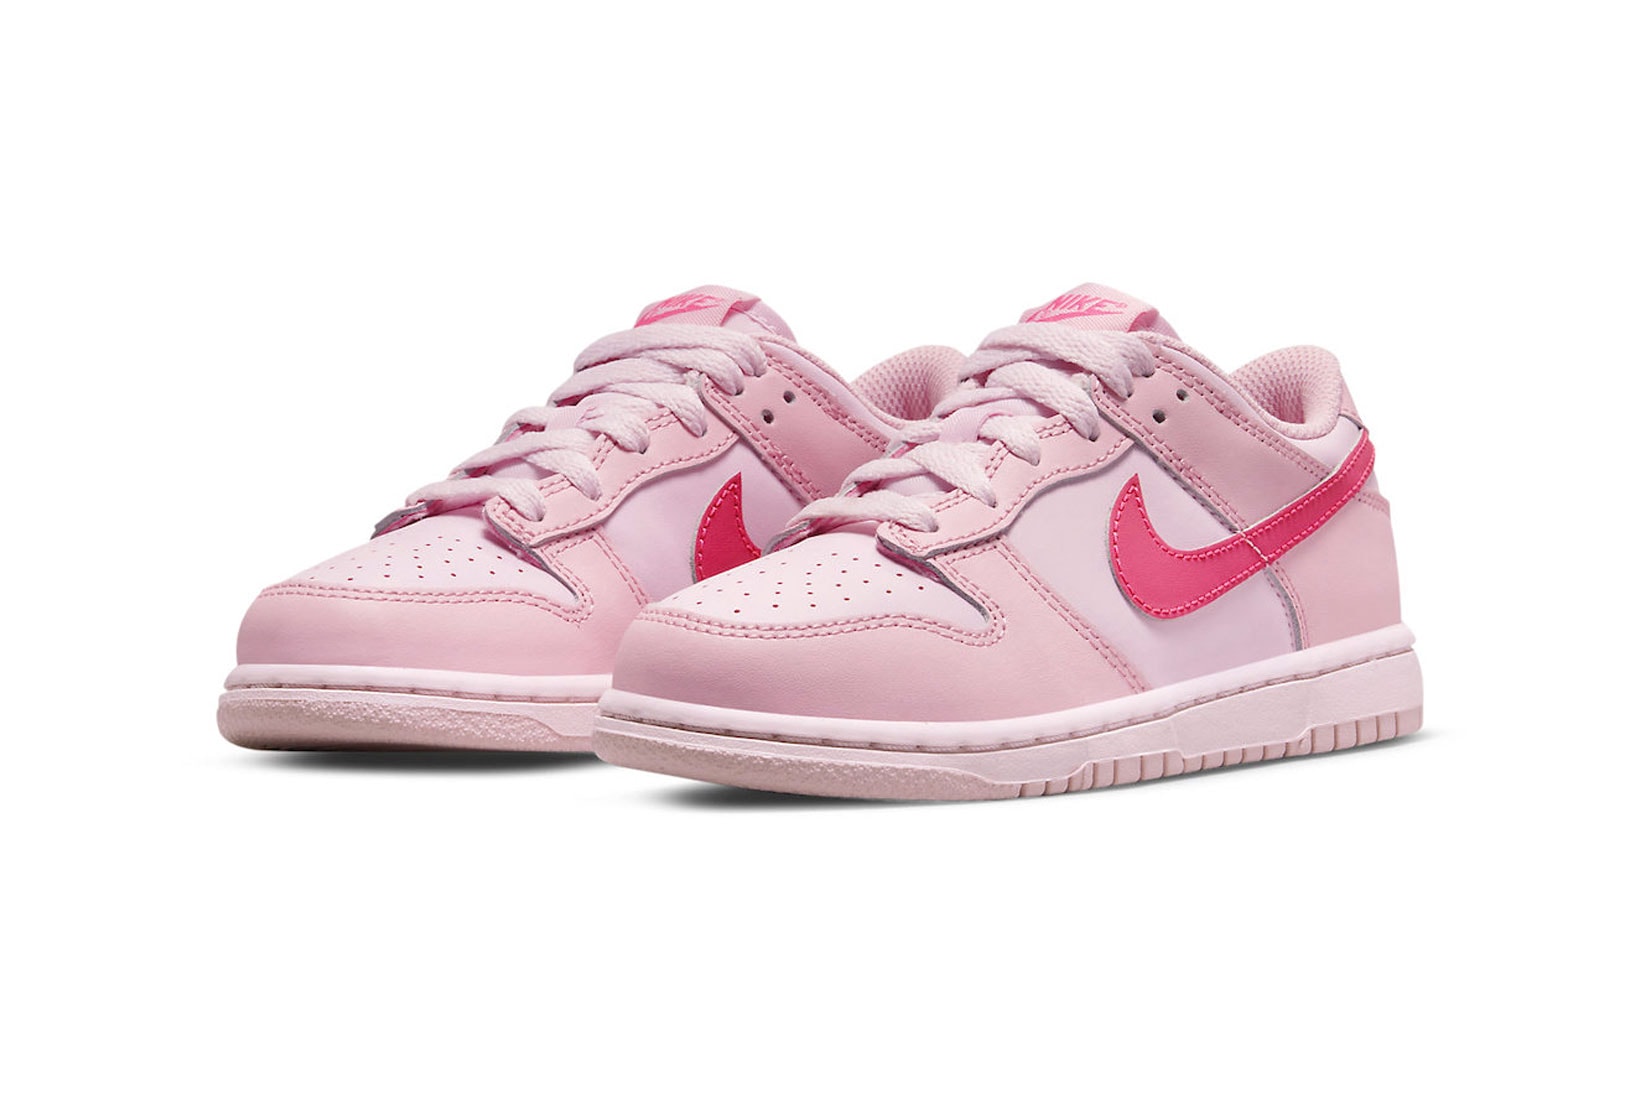 Nike Dunk Low "Triple Pink" Colorway Sneakers Release Info